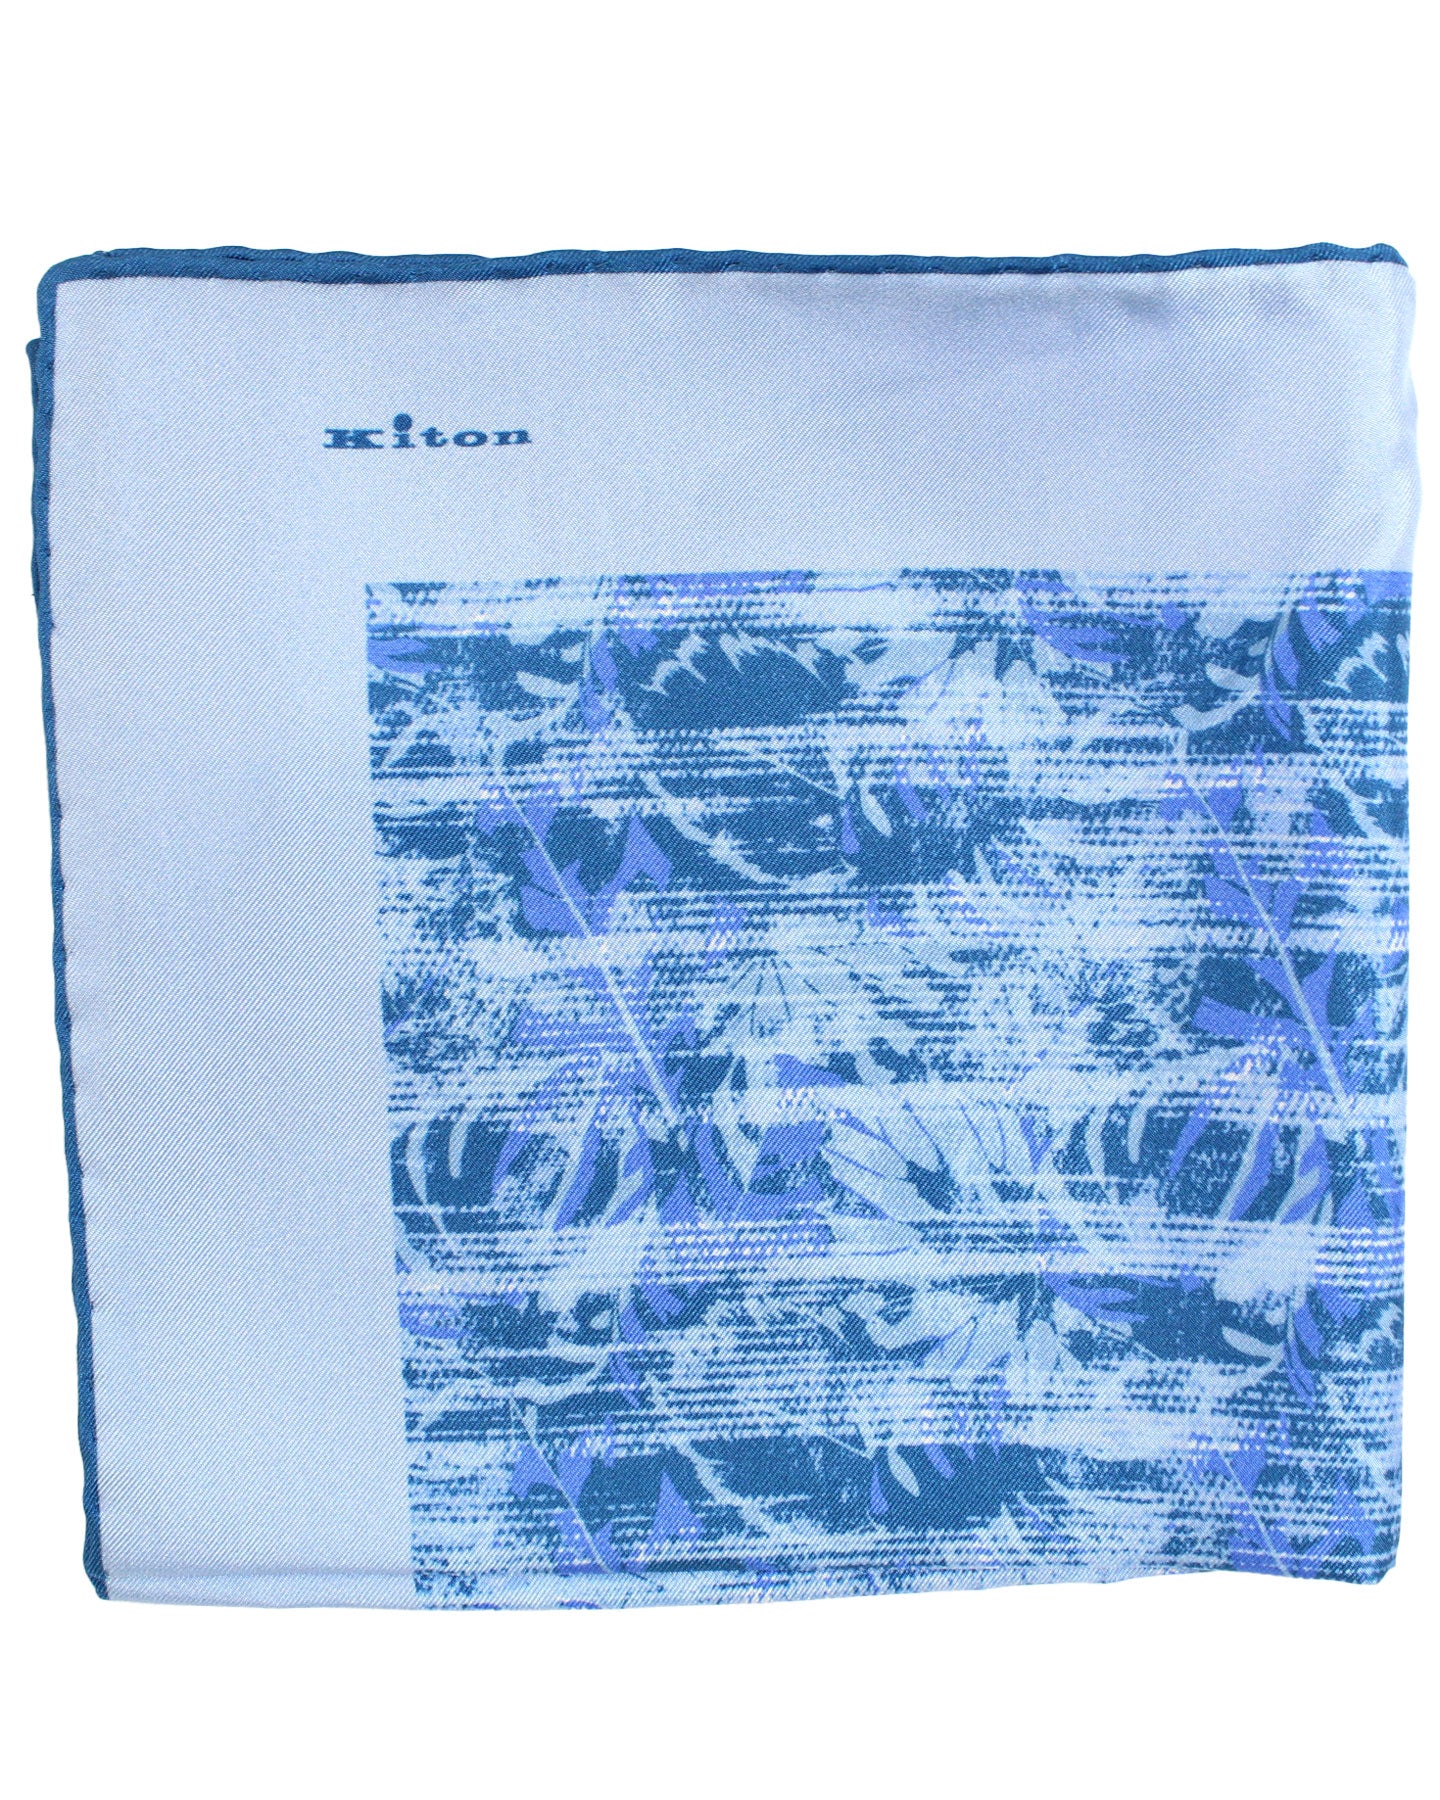 Kiton Silk Pocket Square Blue Sky Blue Floral